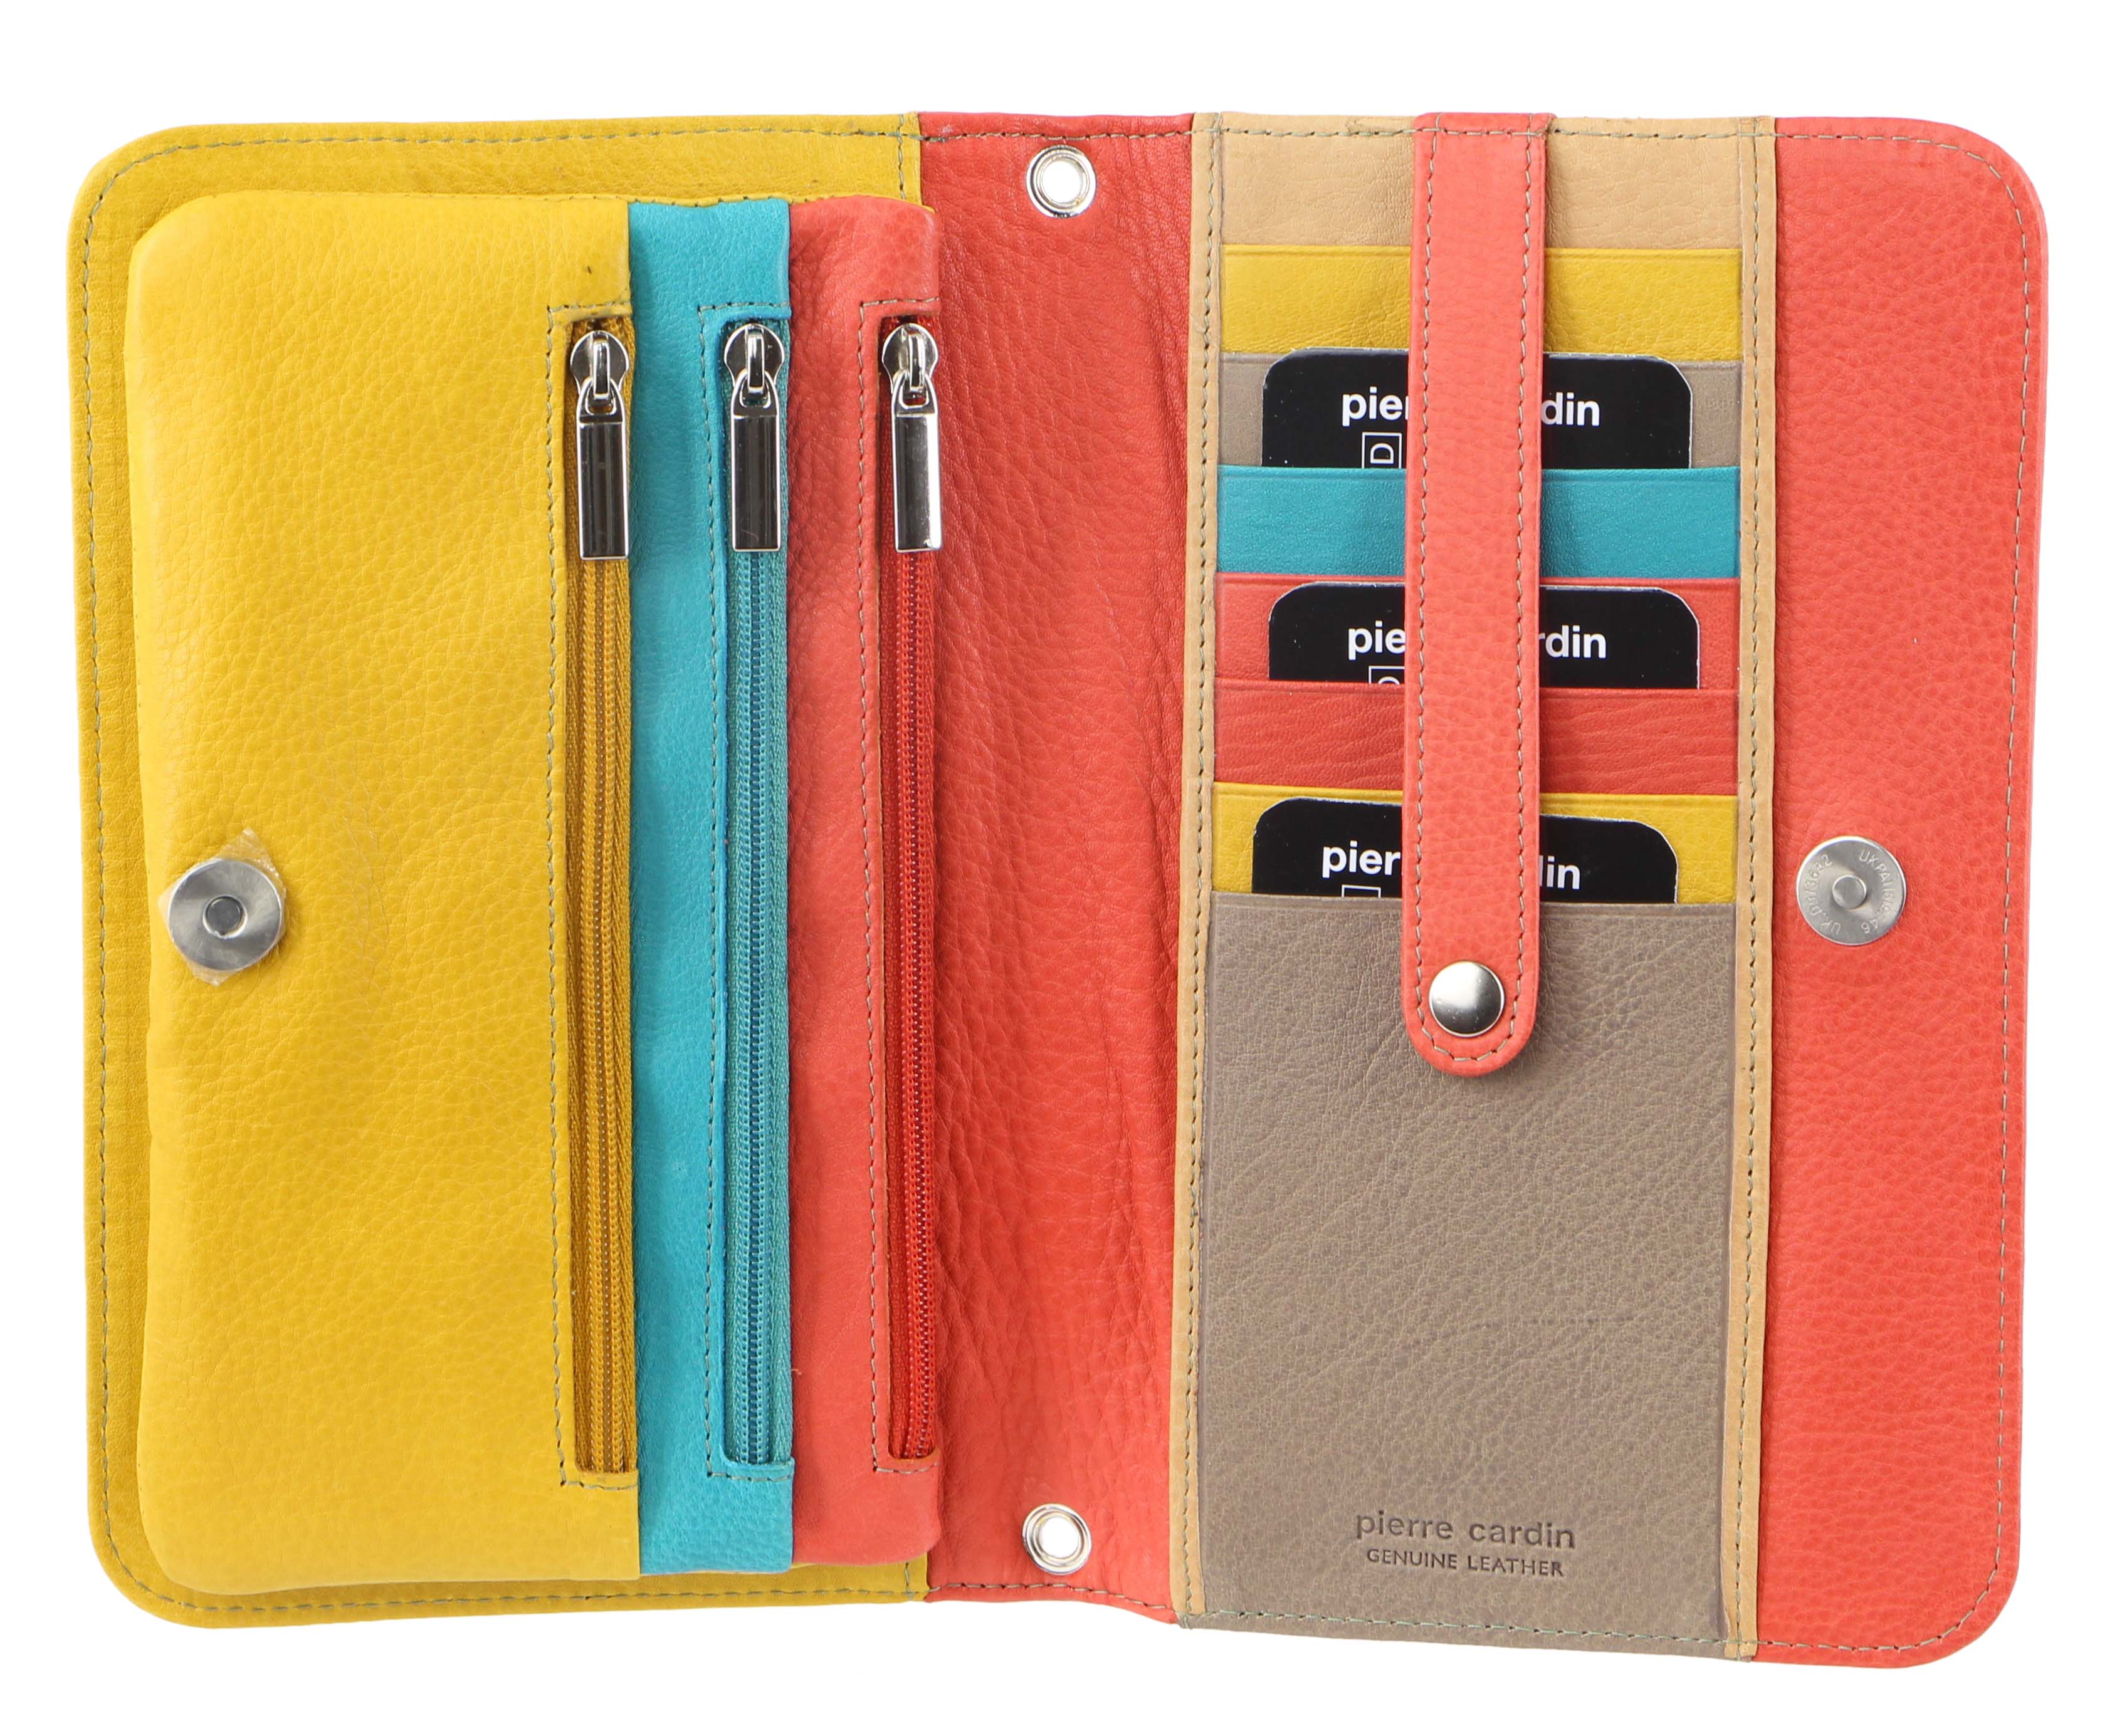 Pierre Cardin Multi-Colour Leather Wallet Bag/ Clutch in Orange